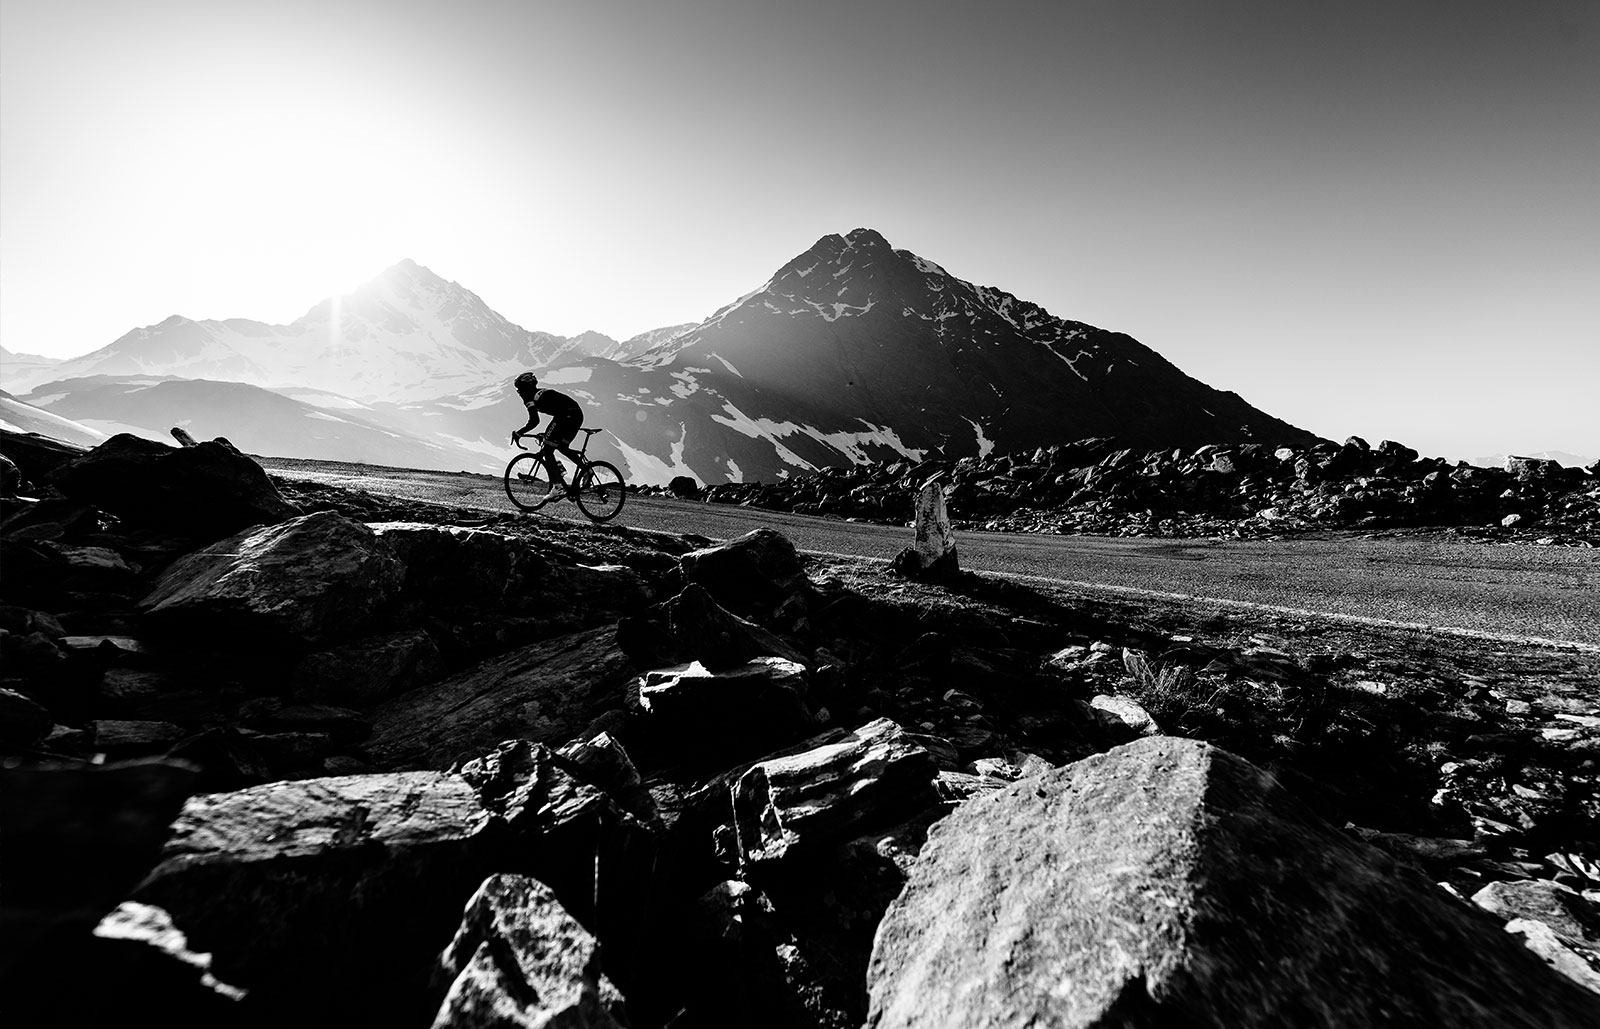 A cyclist climbing a mountain road among the rocks